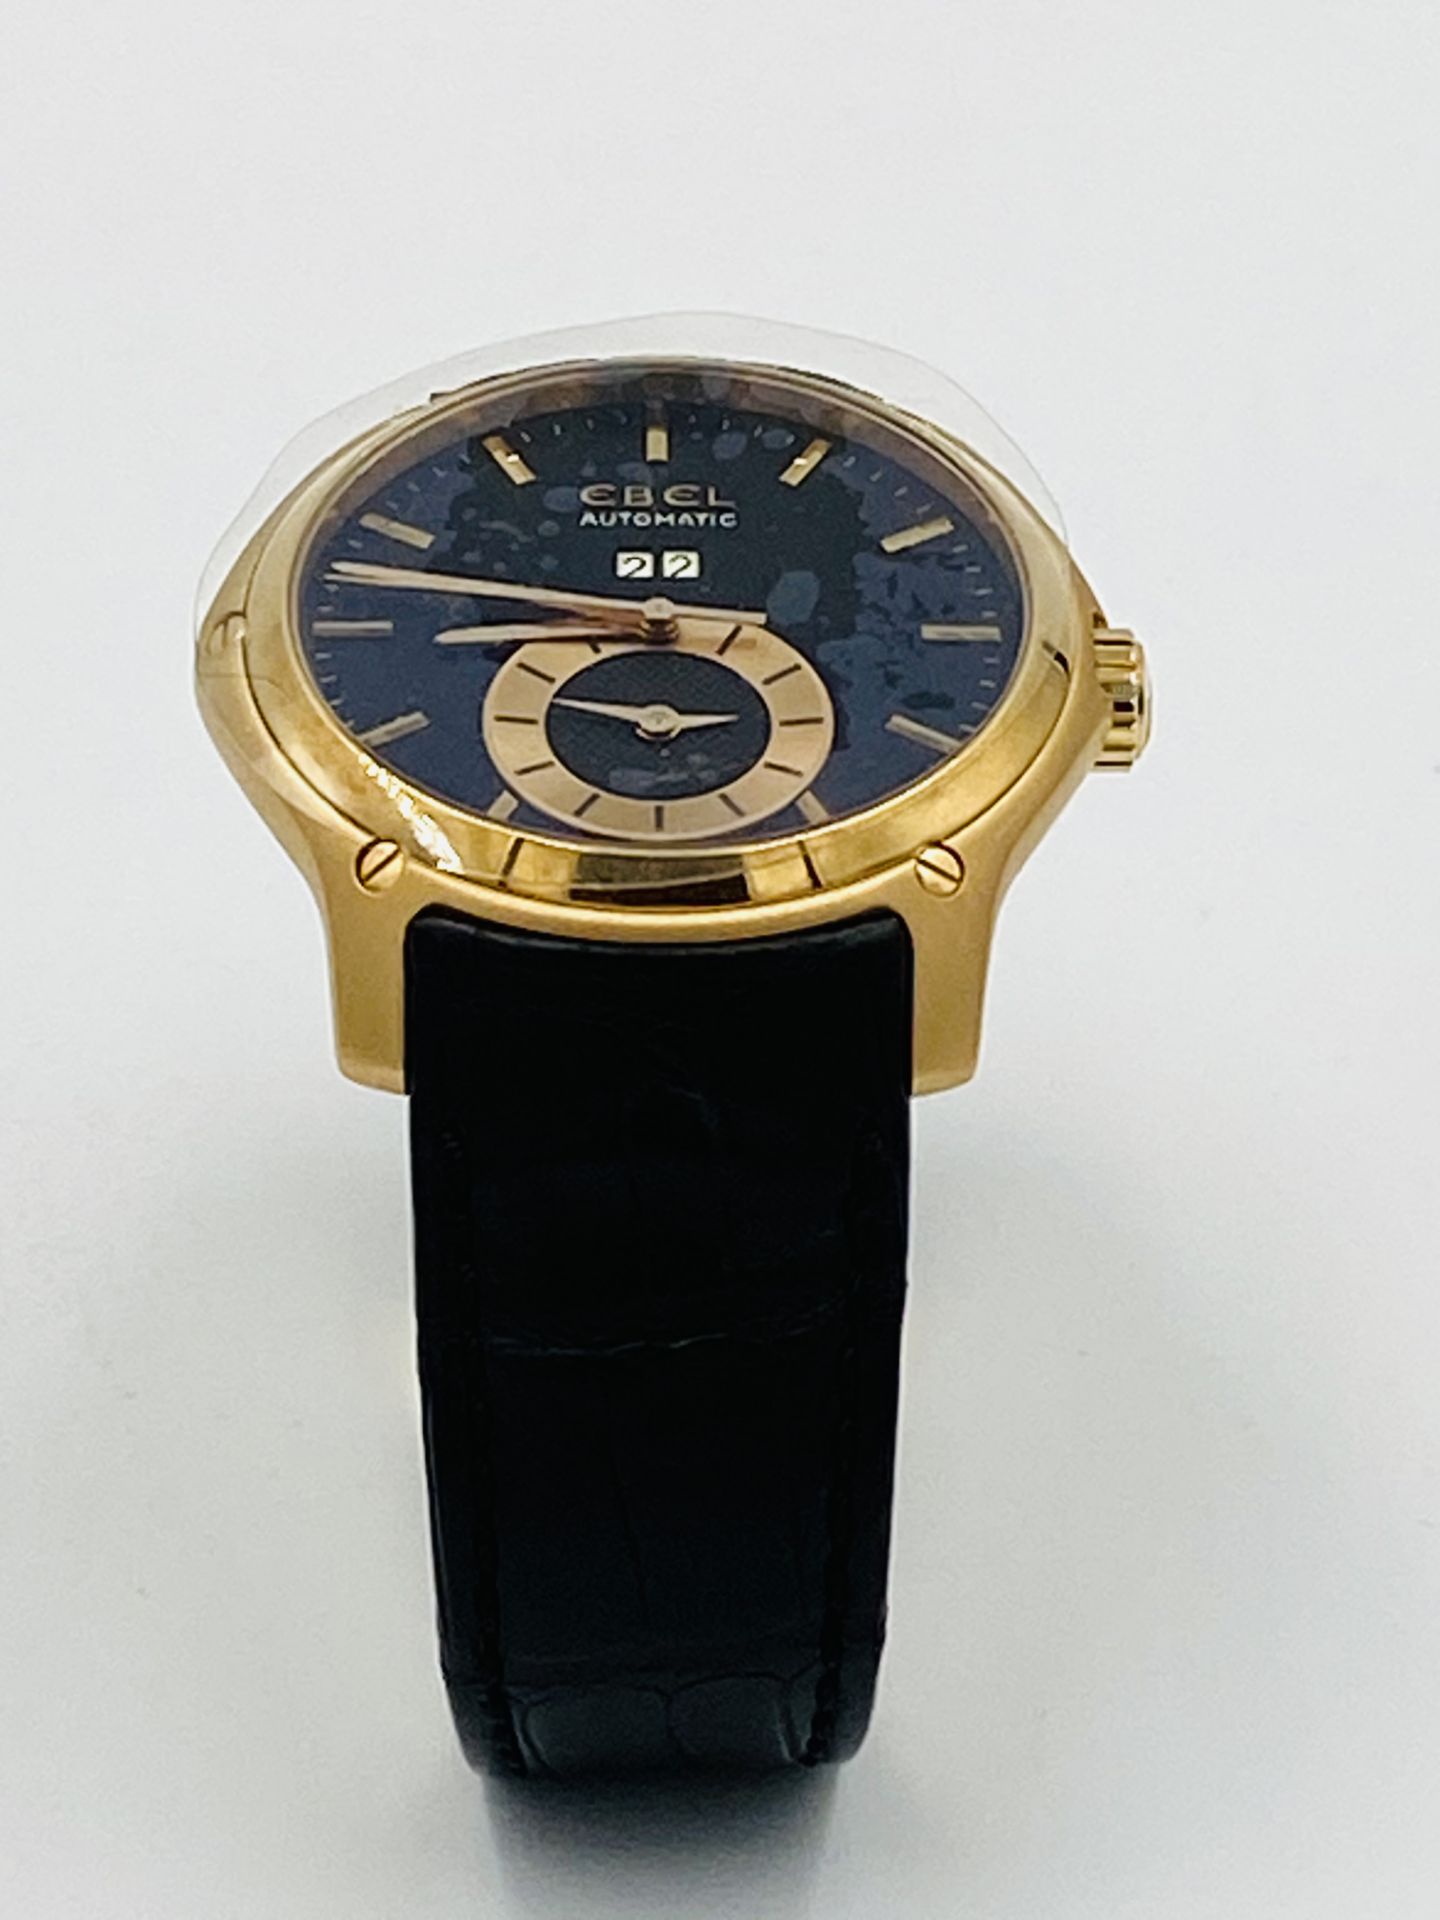 18ct gold Ebel wrist watch - Image 2 of 5